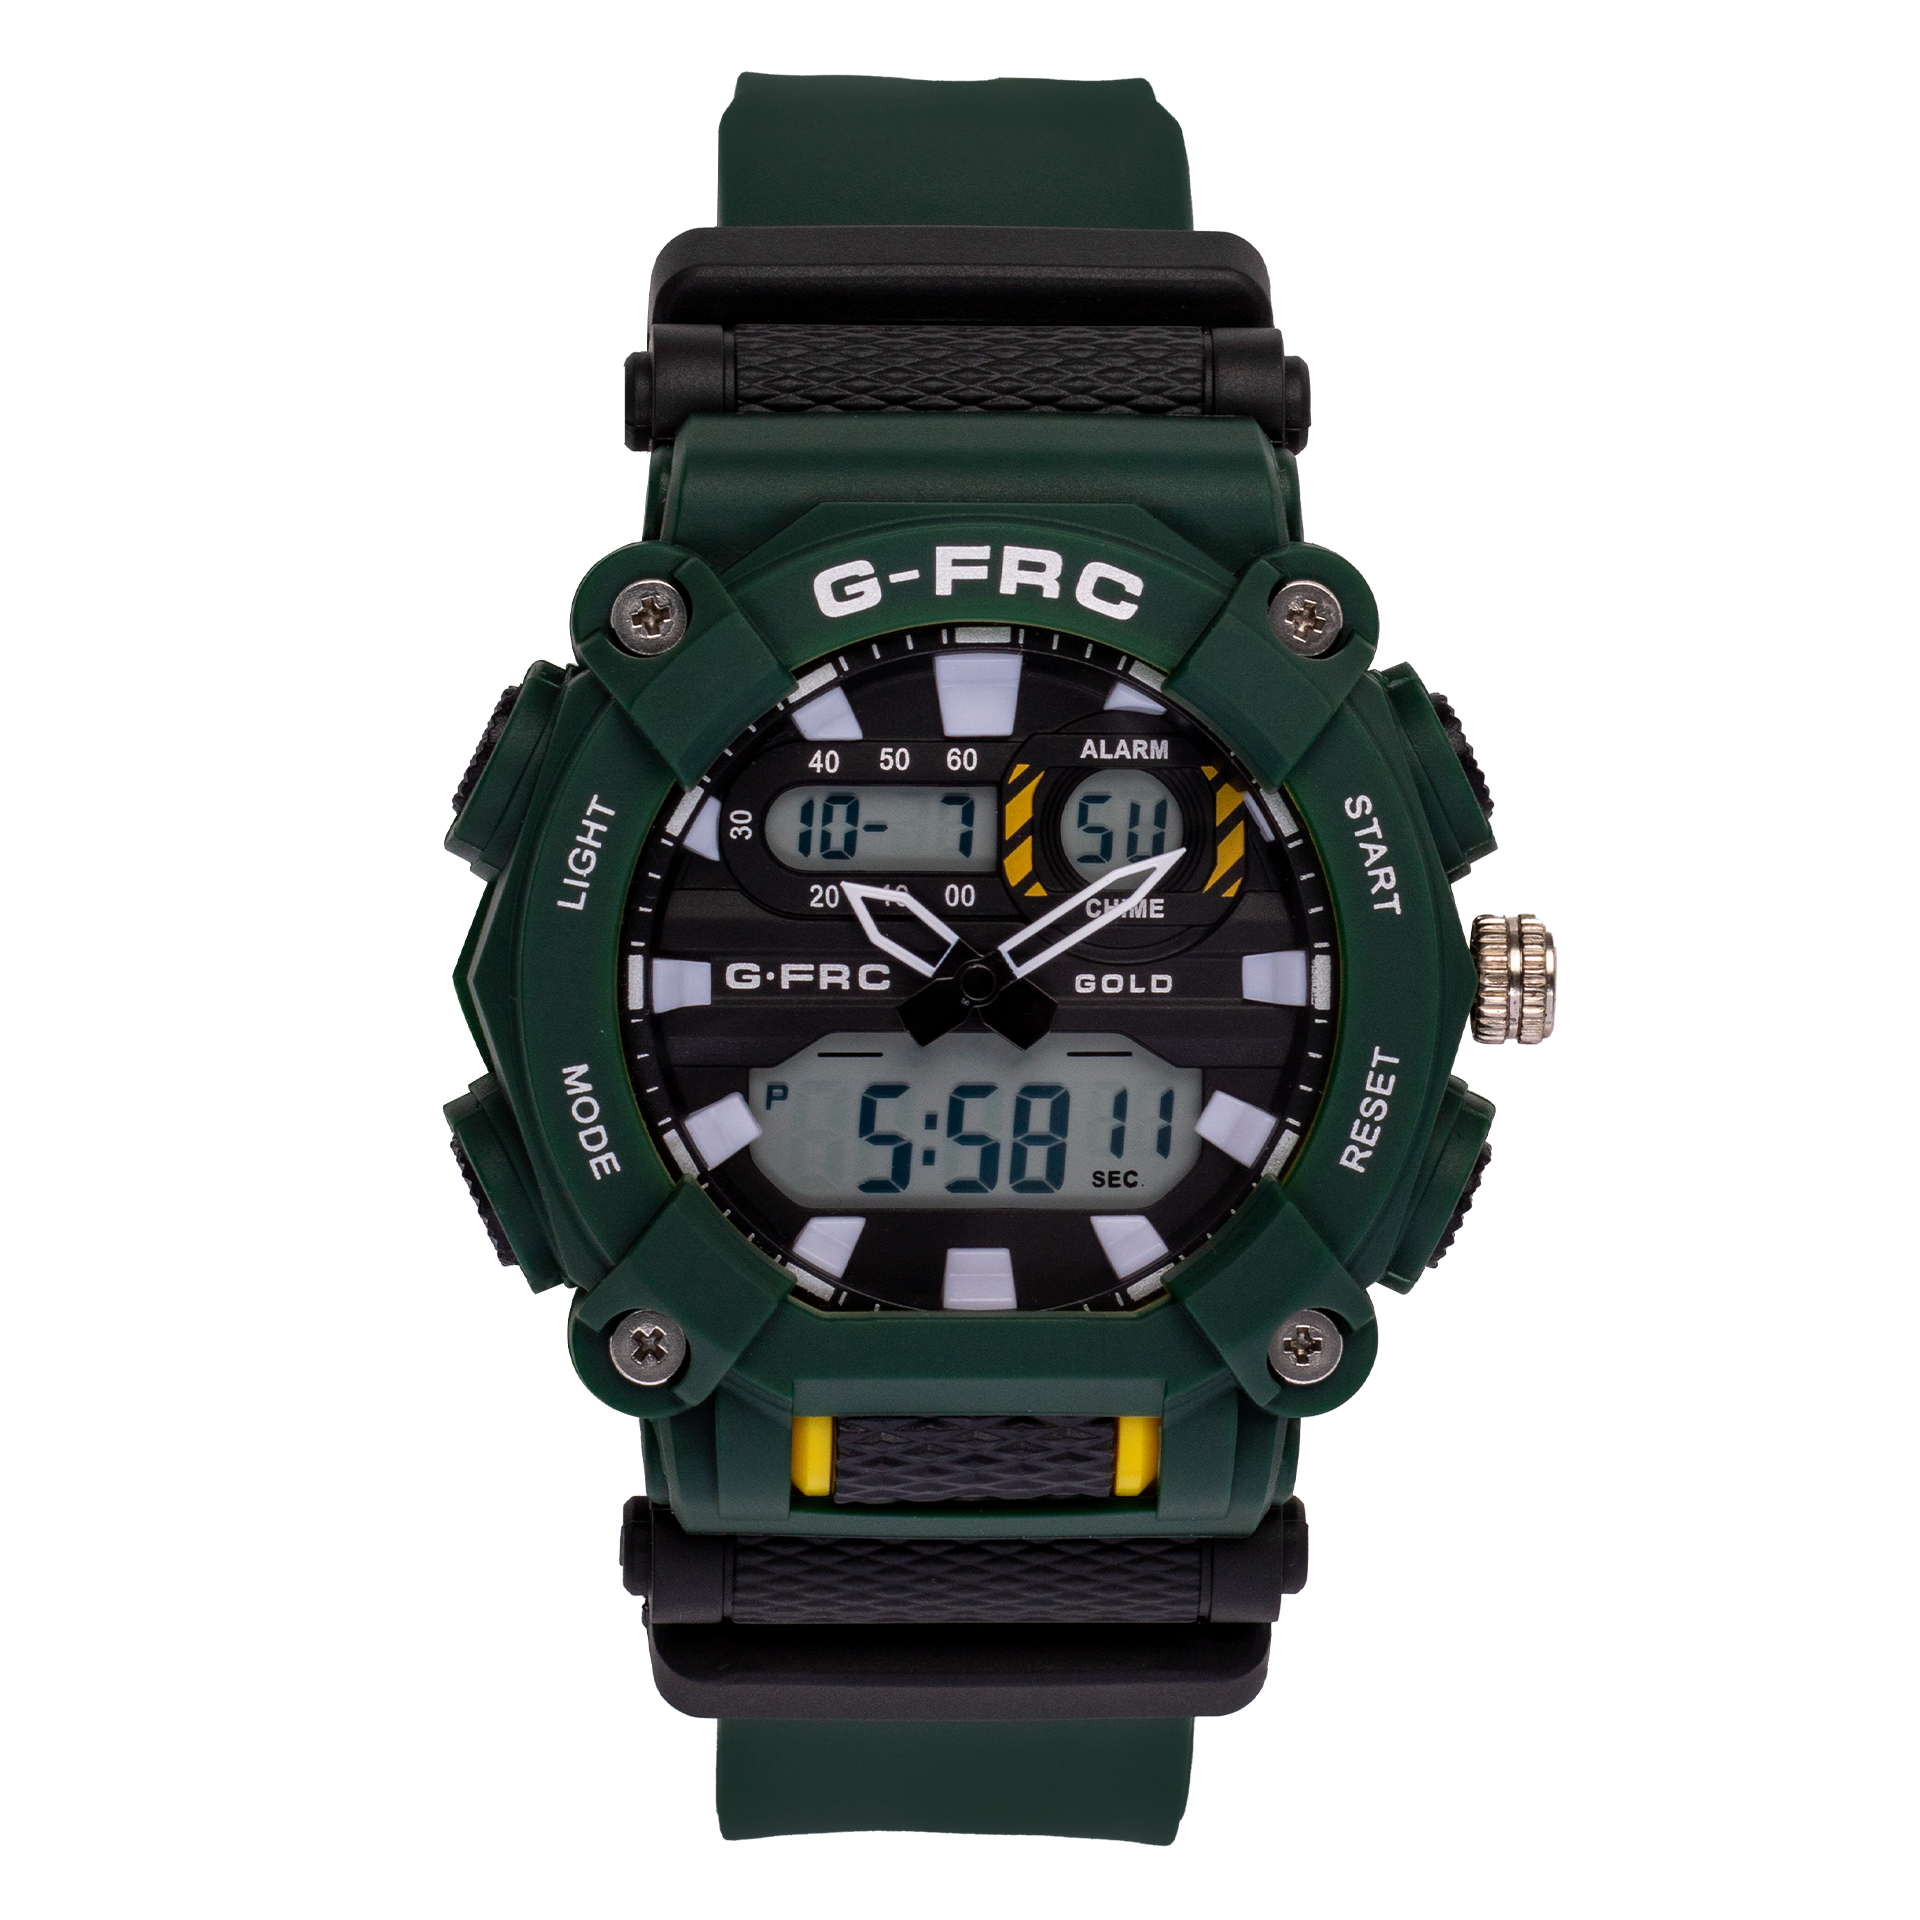 Reloj G-FORCE GOLD AK21180 plástico para hombre